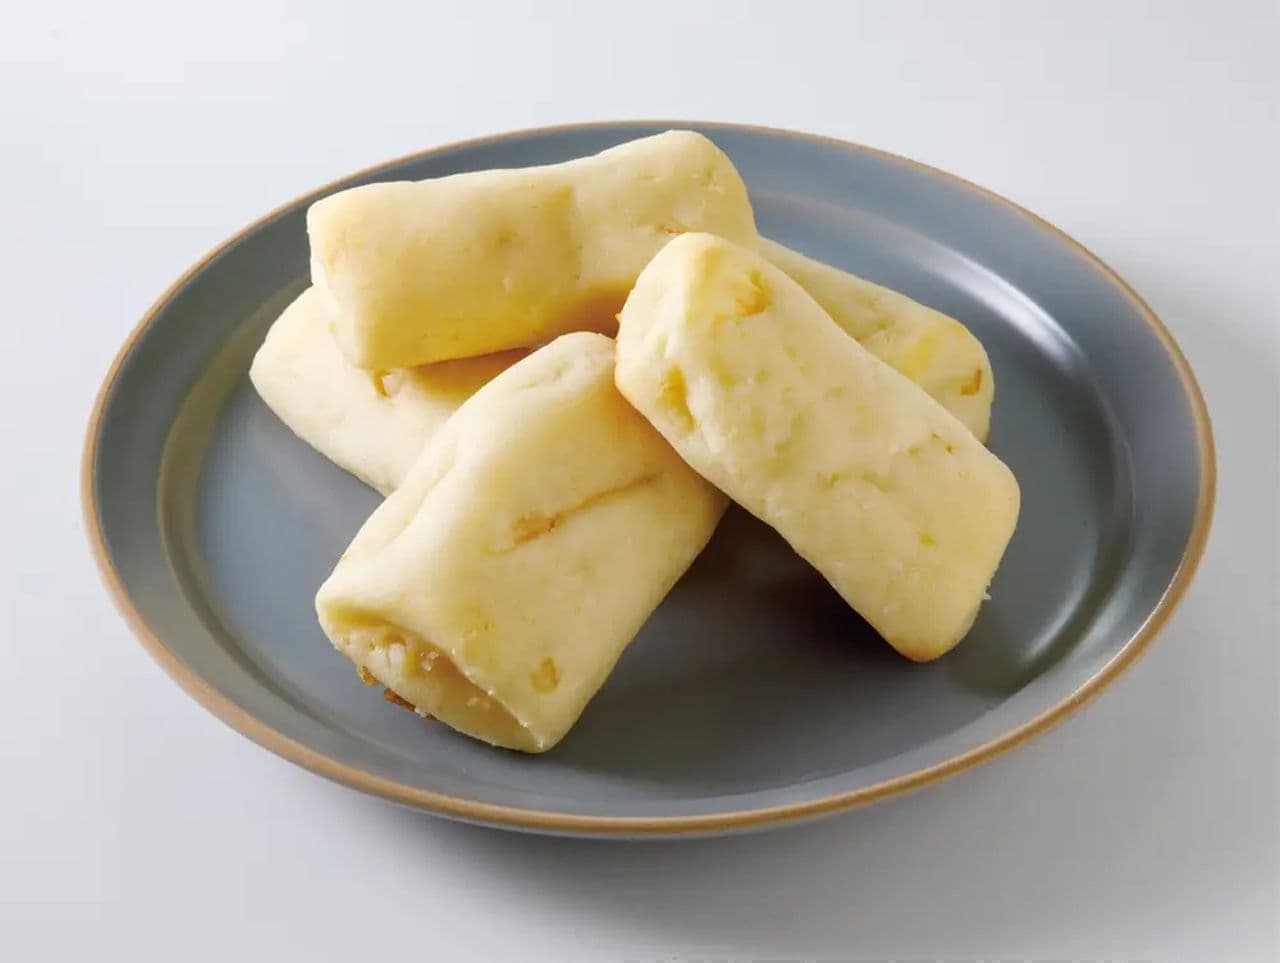 KINOKUNIYA "Setouchi Lemon Mochimochi Bread